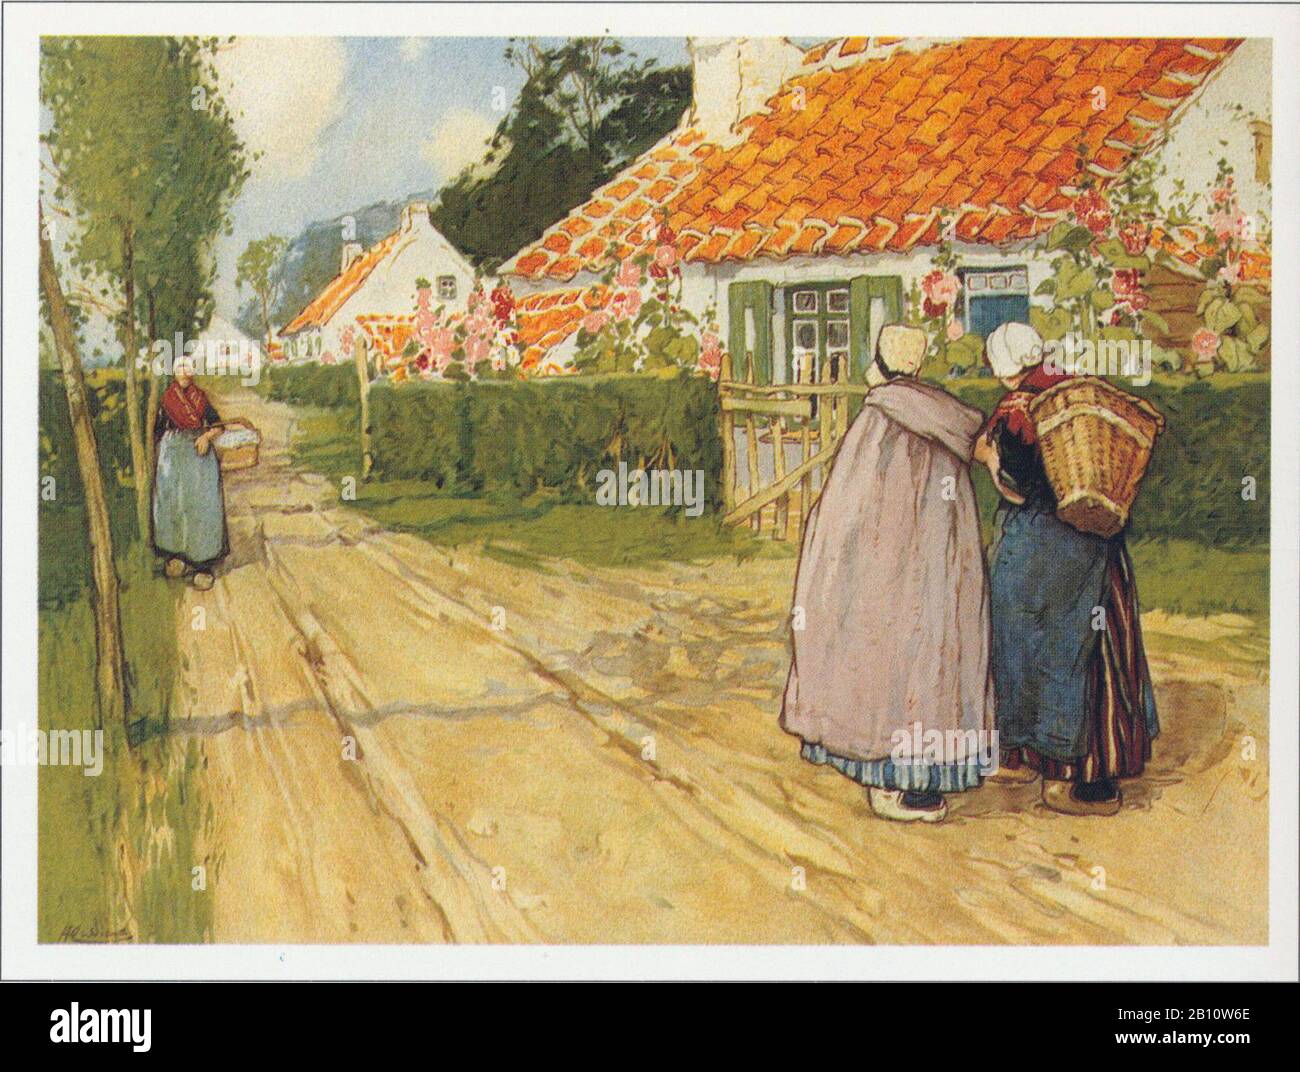 Landweg betuwe - Illustrazione di Henri Cassiers (1858 - 1944) Foto Stock